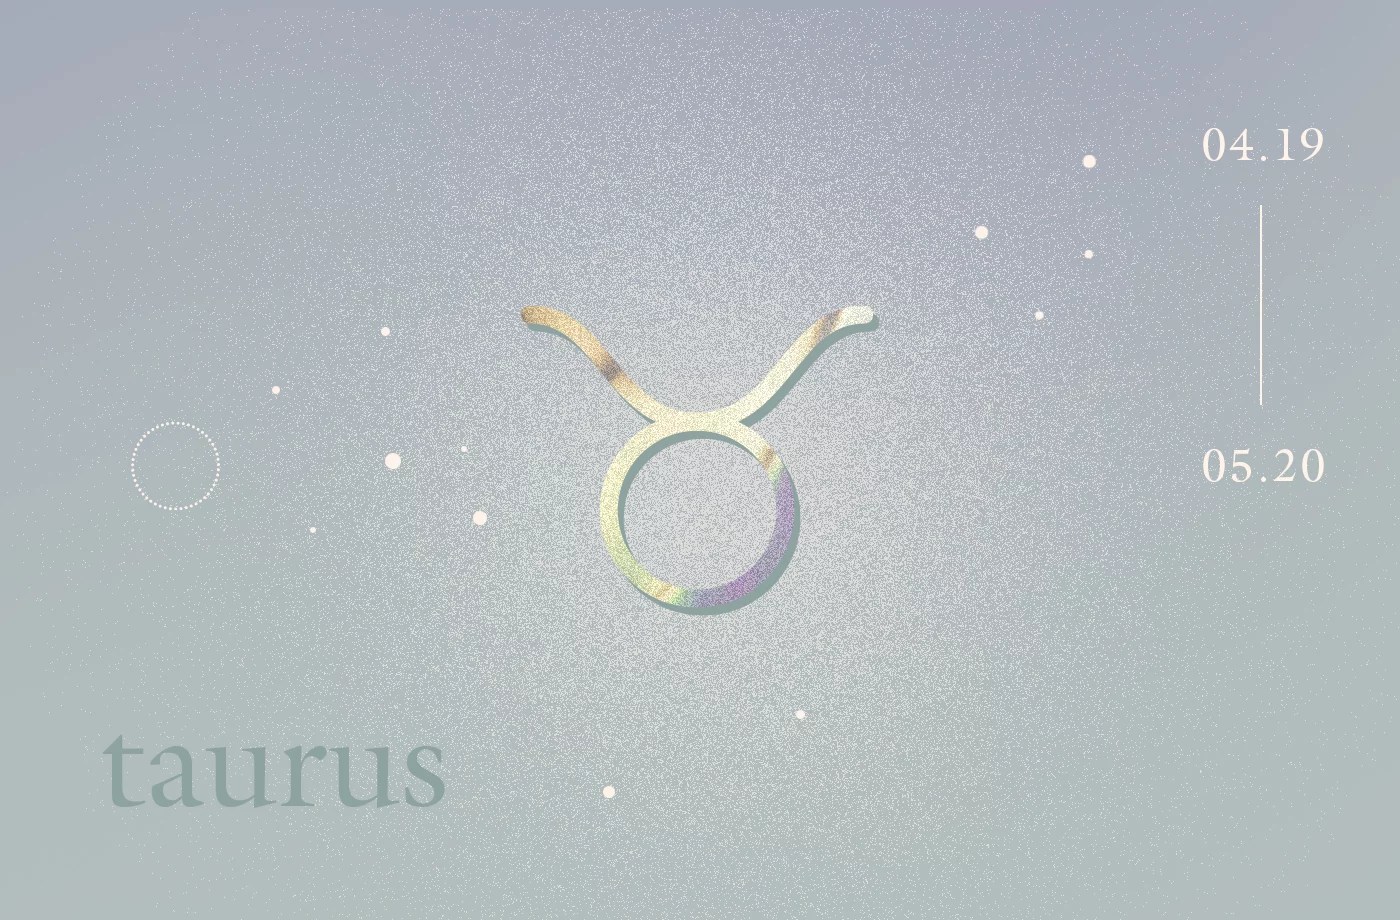 Aries symbol that looks like a ram.